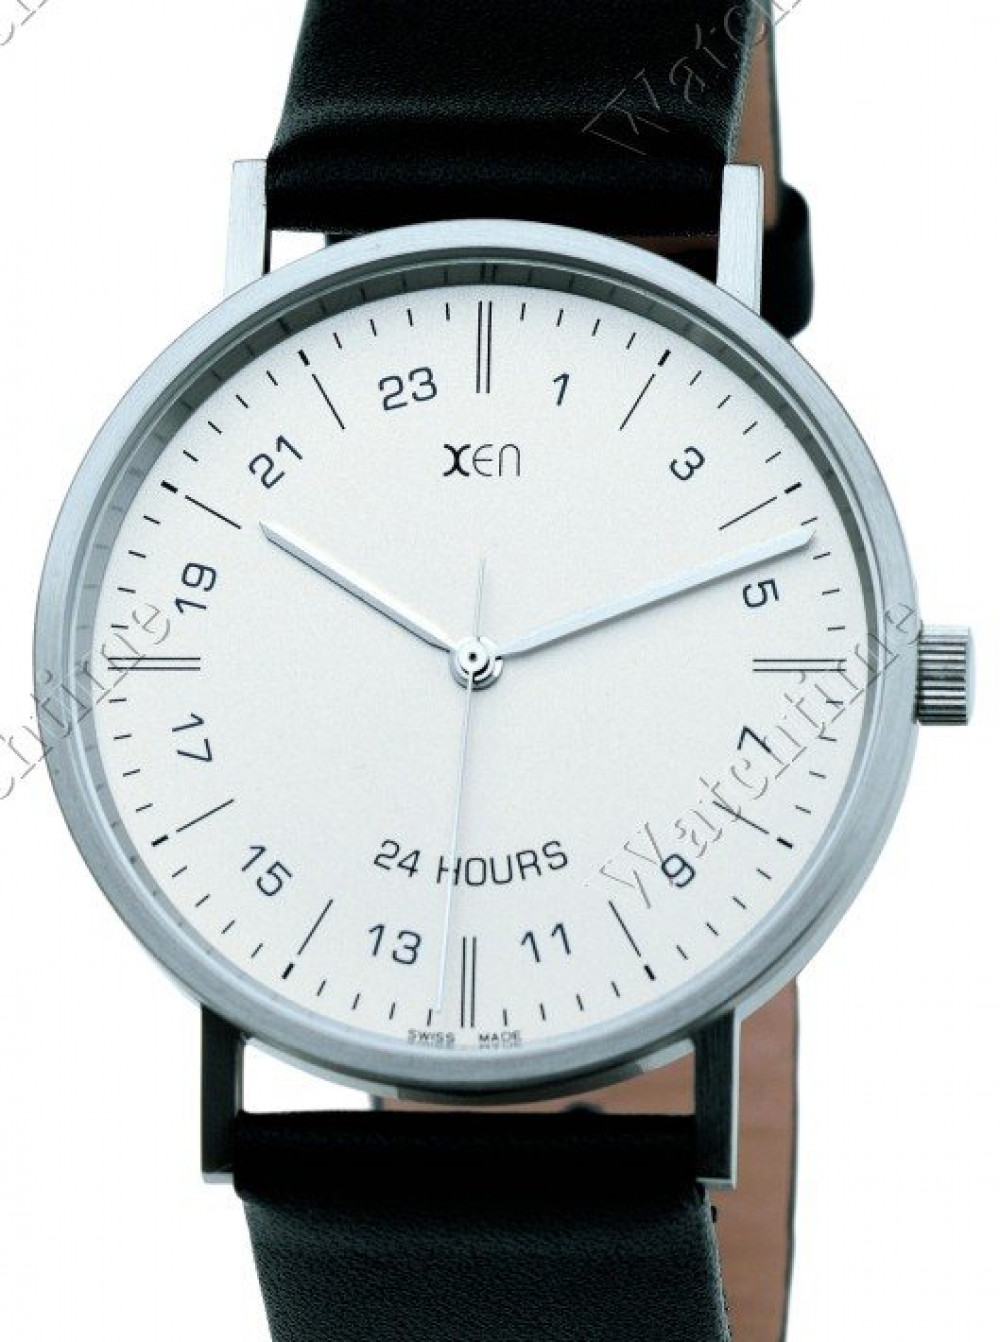 Zegarek firmy XEN, model XQ 0044